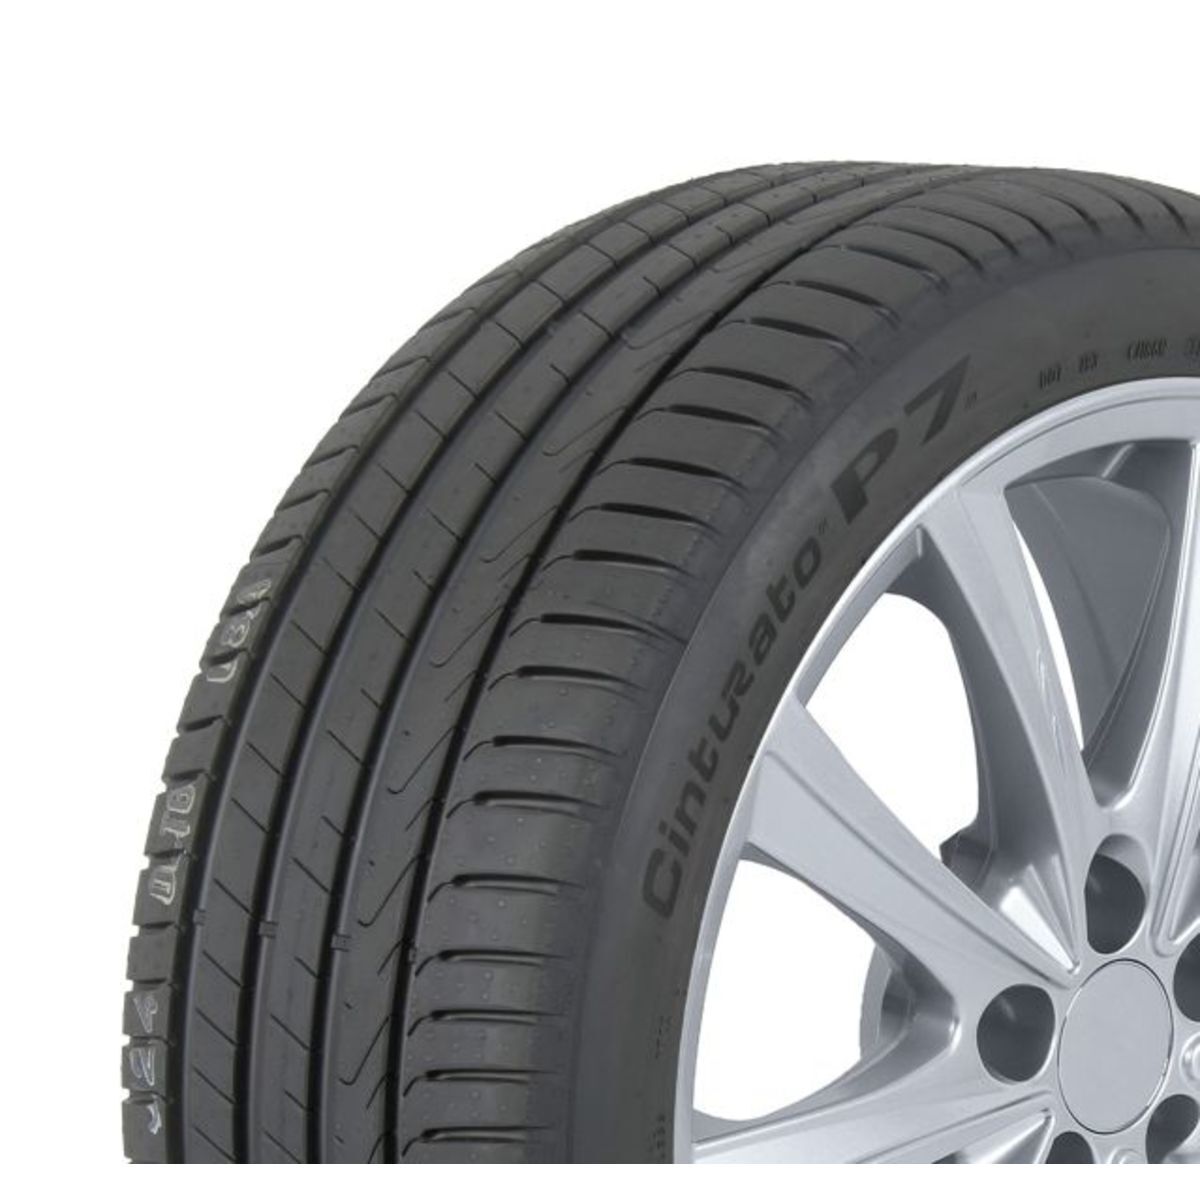 Neumáticos de verano PIRELLI Cinturato P7 235/40R19 XL 96W